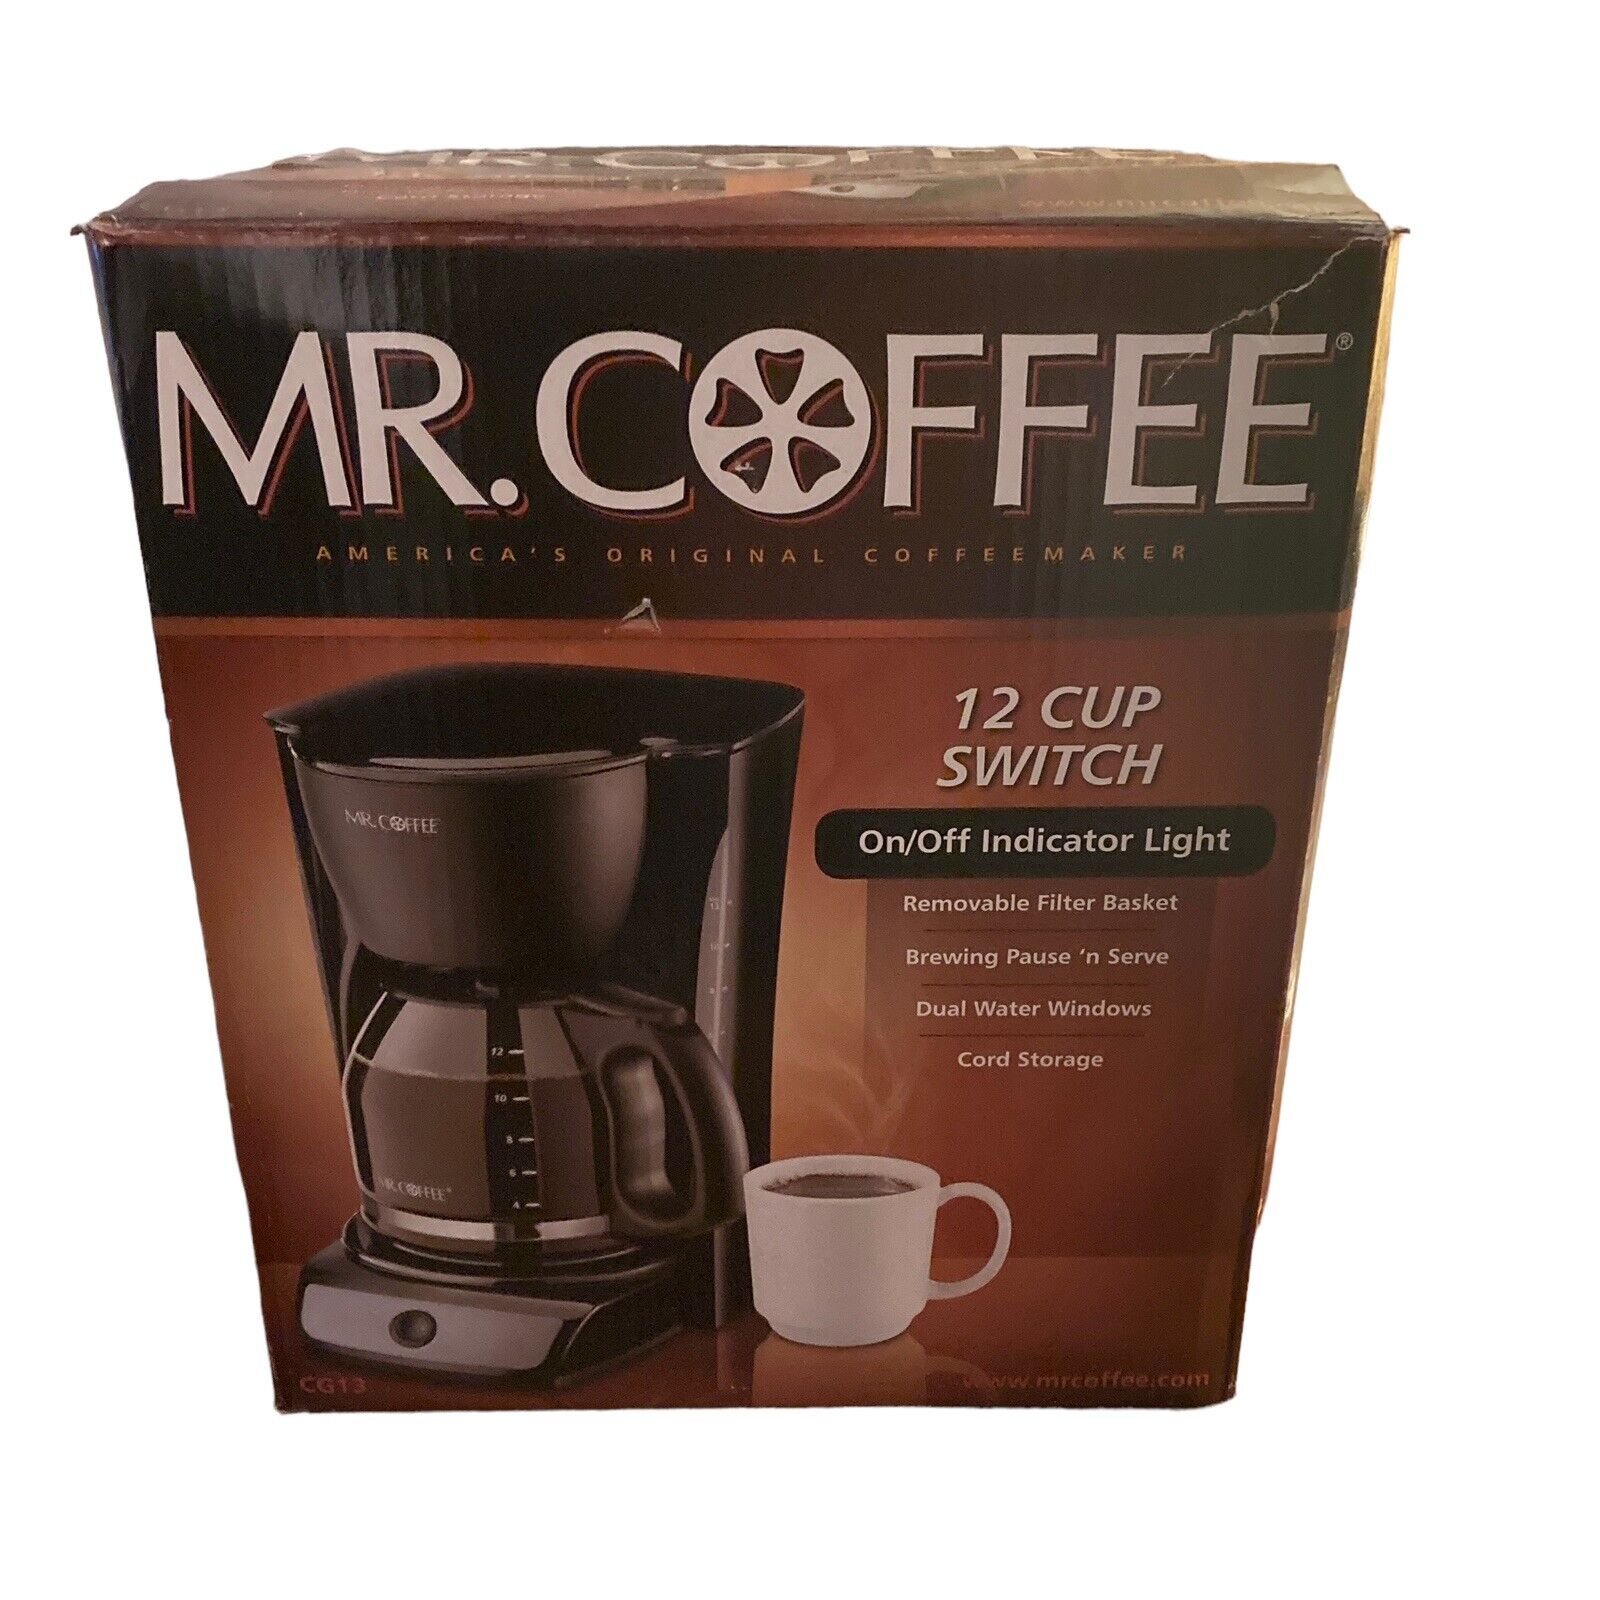 Mr. Coffee CG13 12 Cup Switch Coffeemaker Black